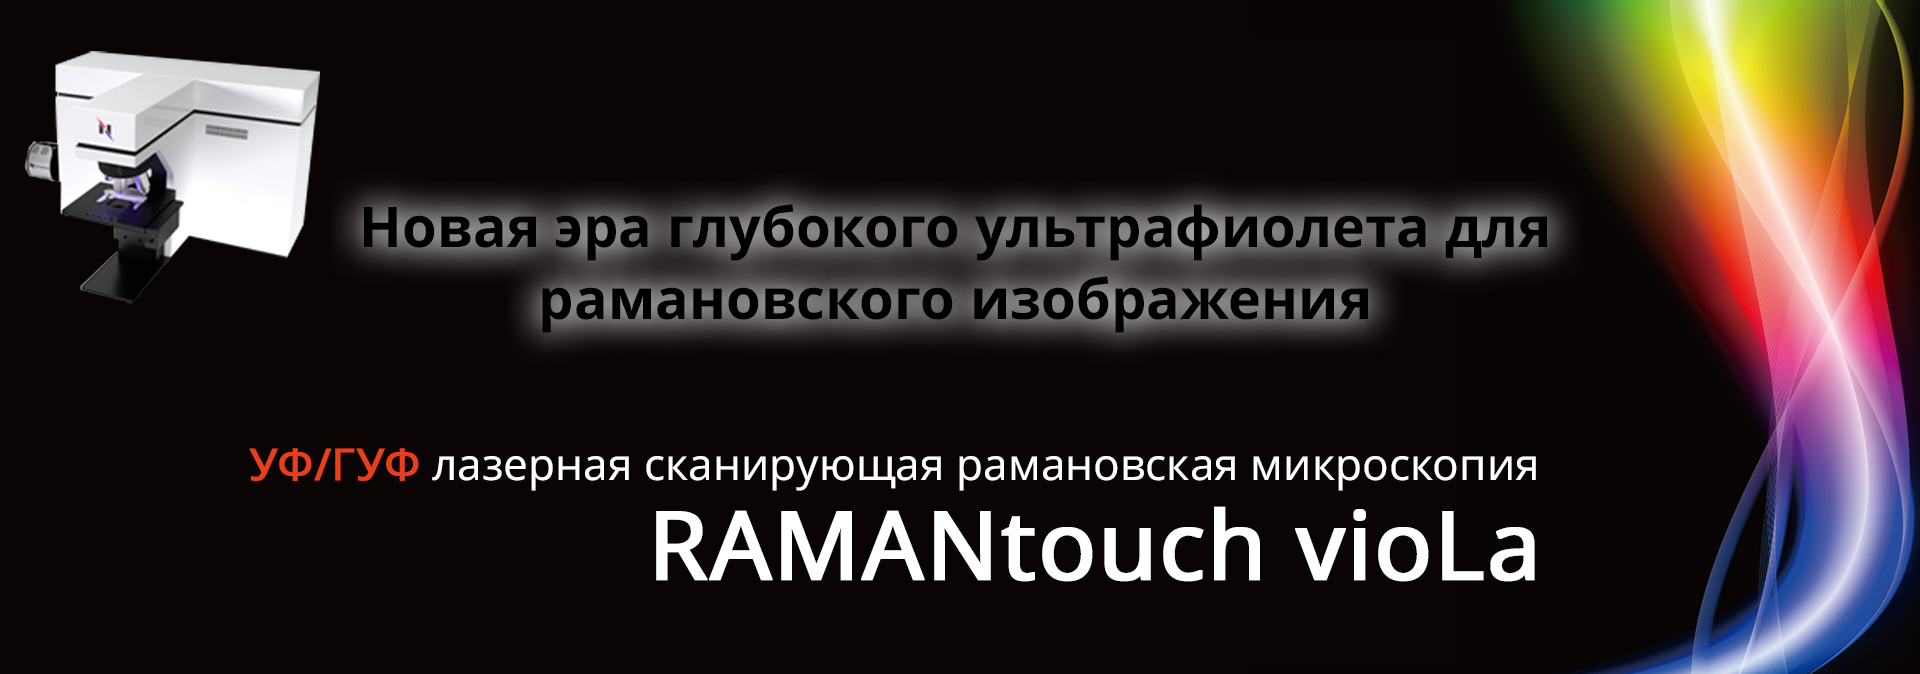 RAMANtouch viola